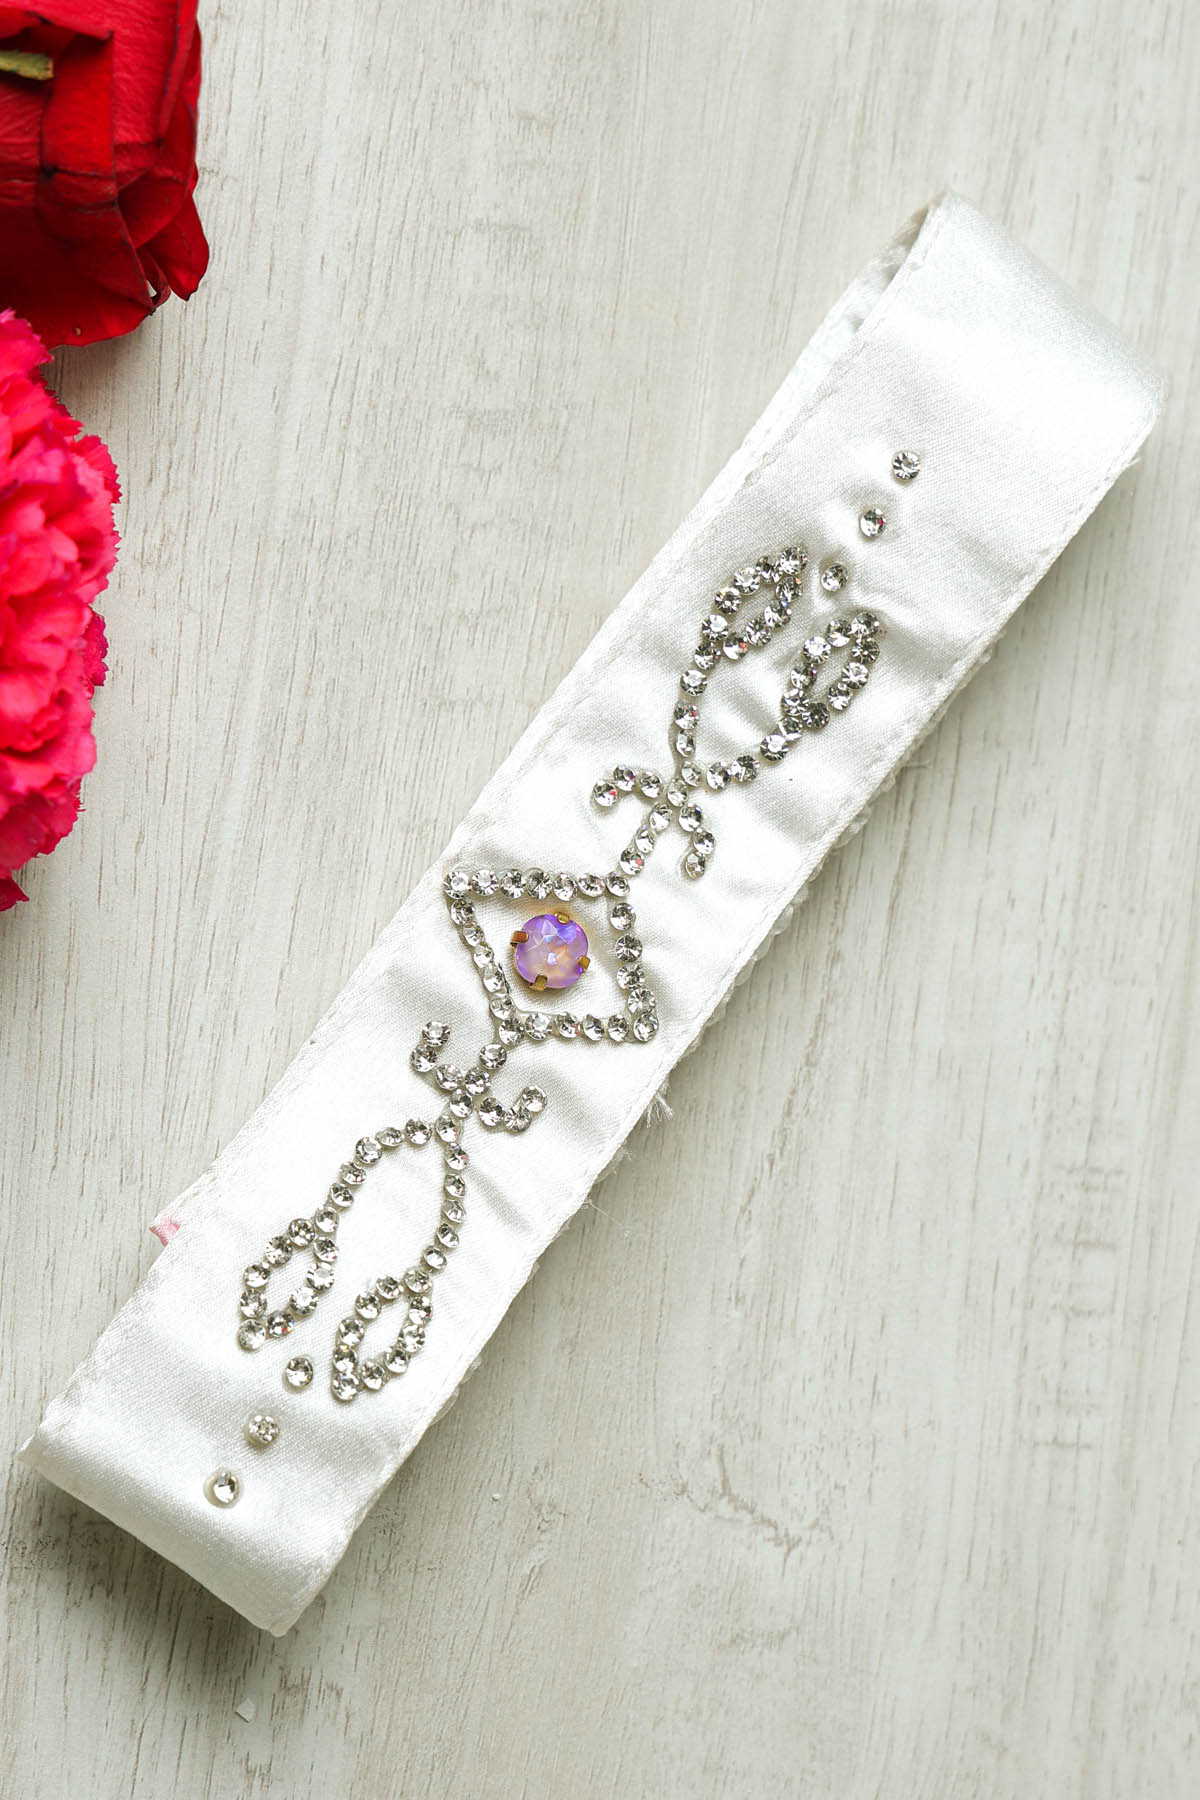 Etti Kapoor White Embellished Satin Belt Accessories online at ScrollnShops